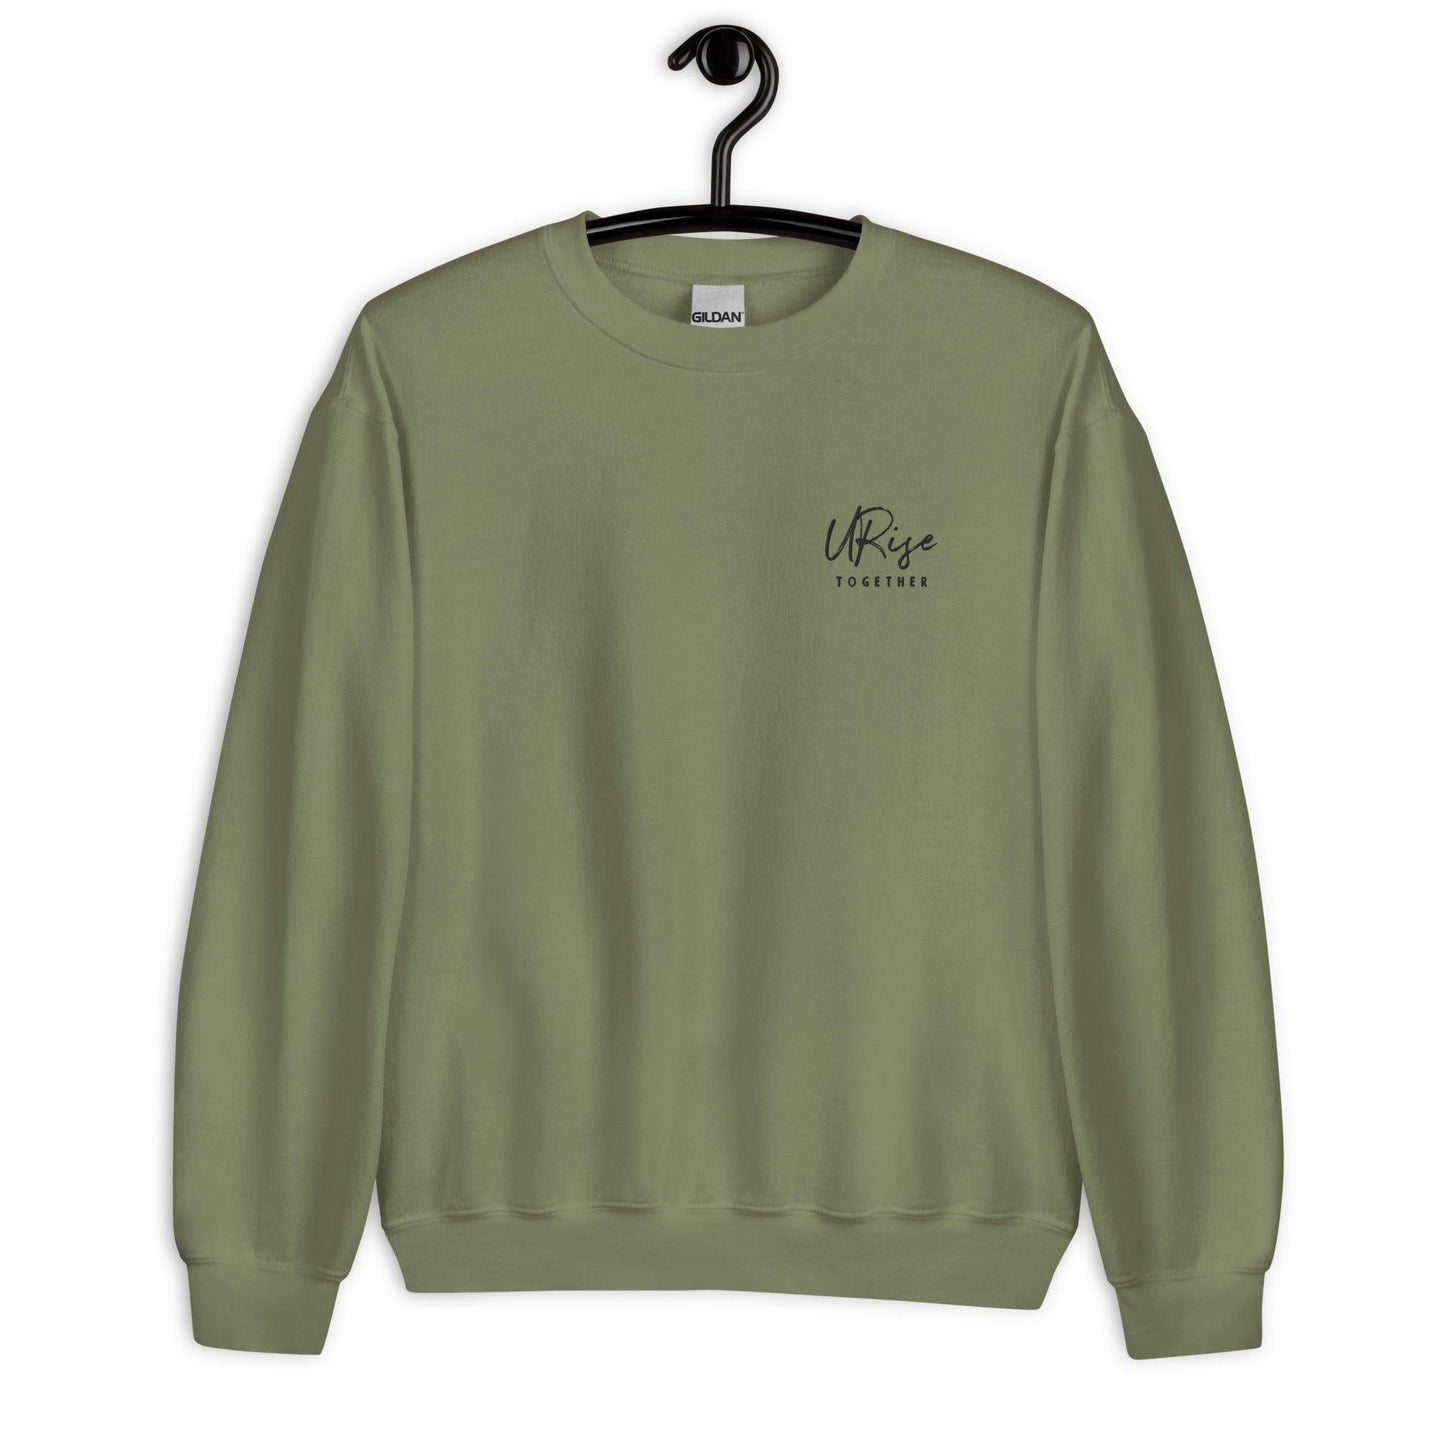 "URise Together" Embroidered Sweatshirt - Military Green - URiseTogetherApparel